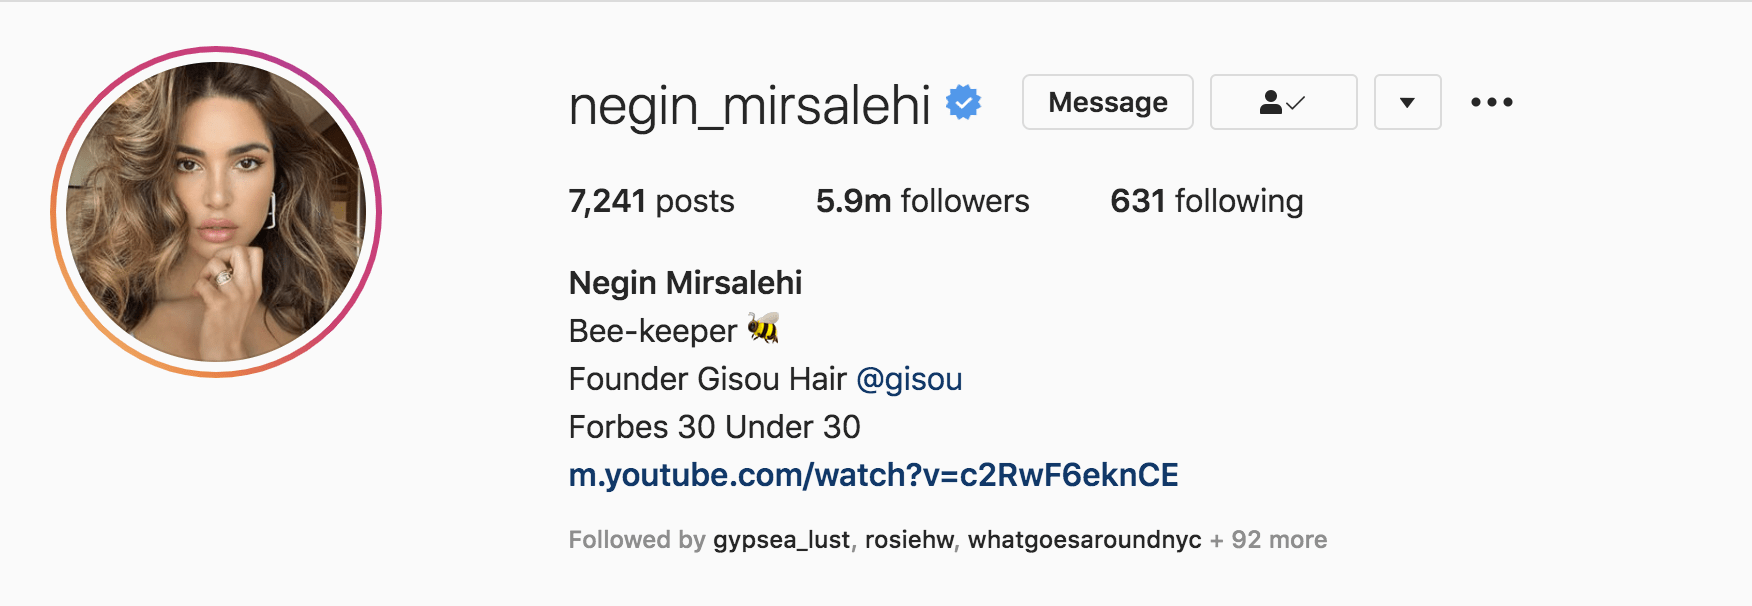 Top Fashion Influencers - Negin Mirsalehi